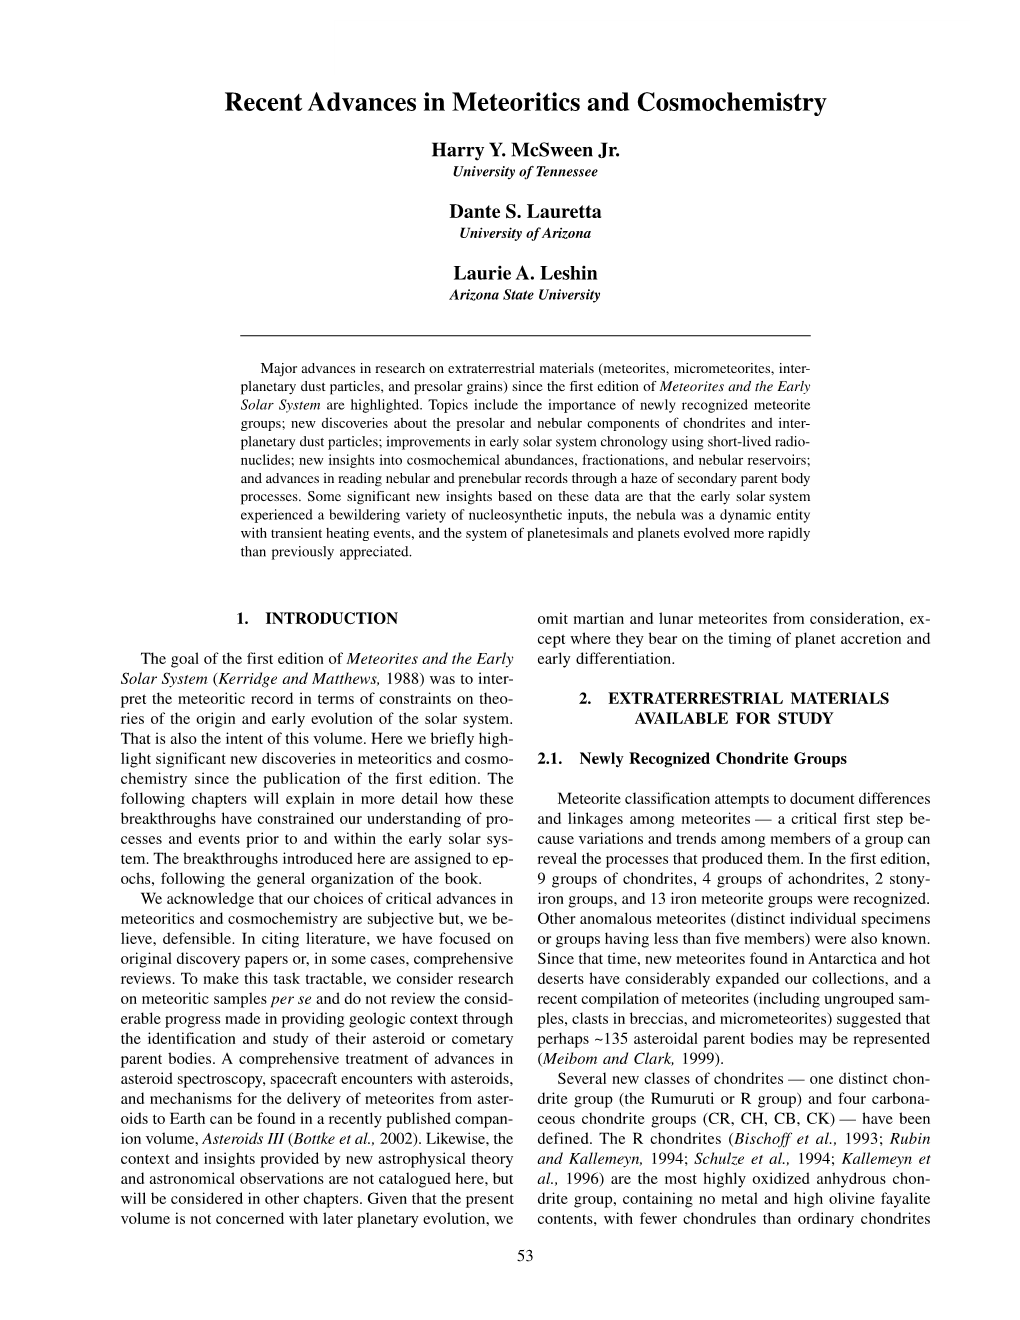 Recent Advances in Meteoritics and Cosmochemistry 53